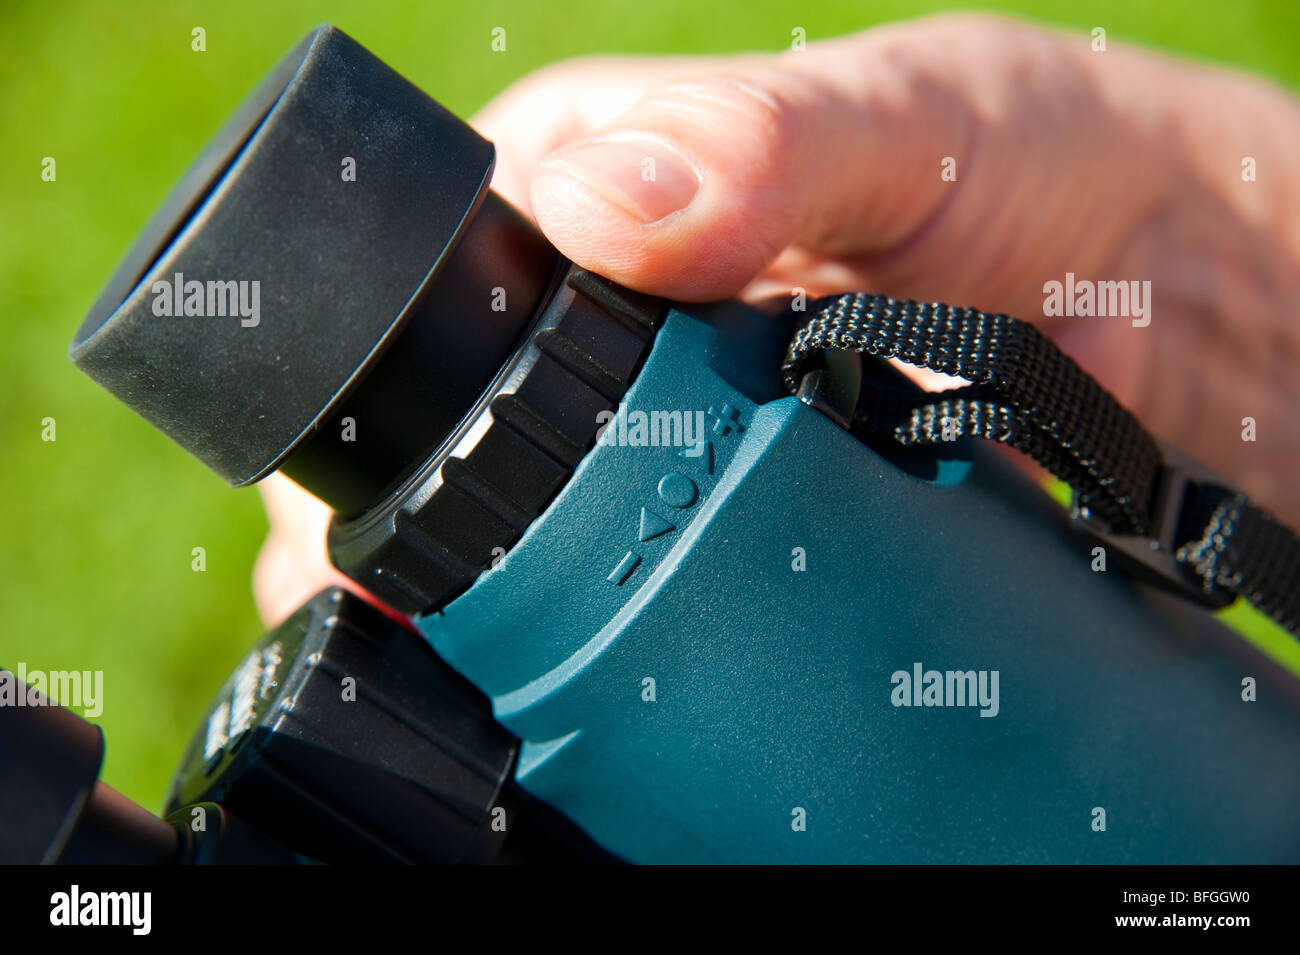 Adjustment of Pentax marine binoculars Stock Photo